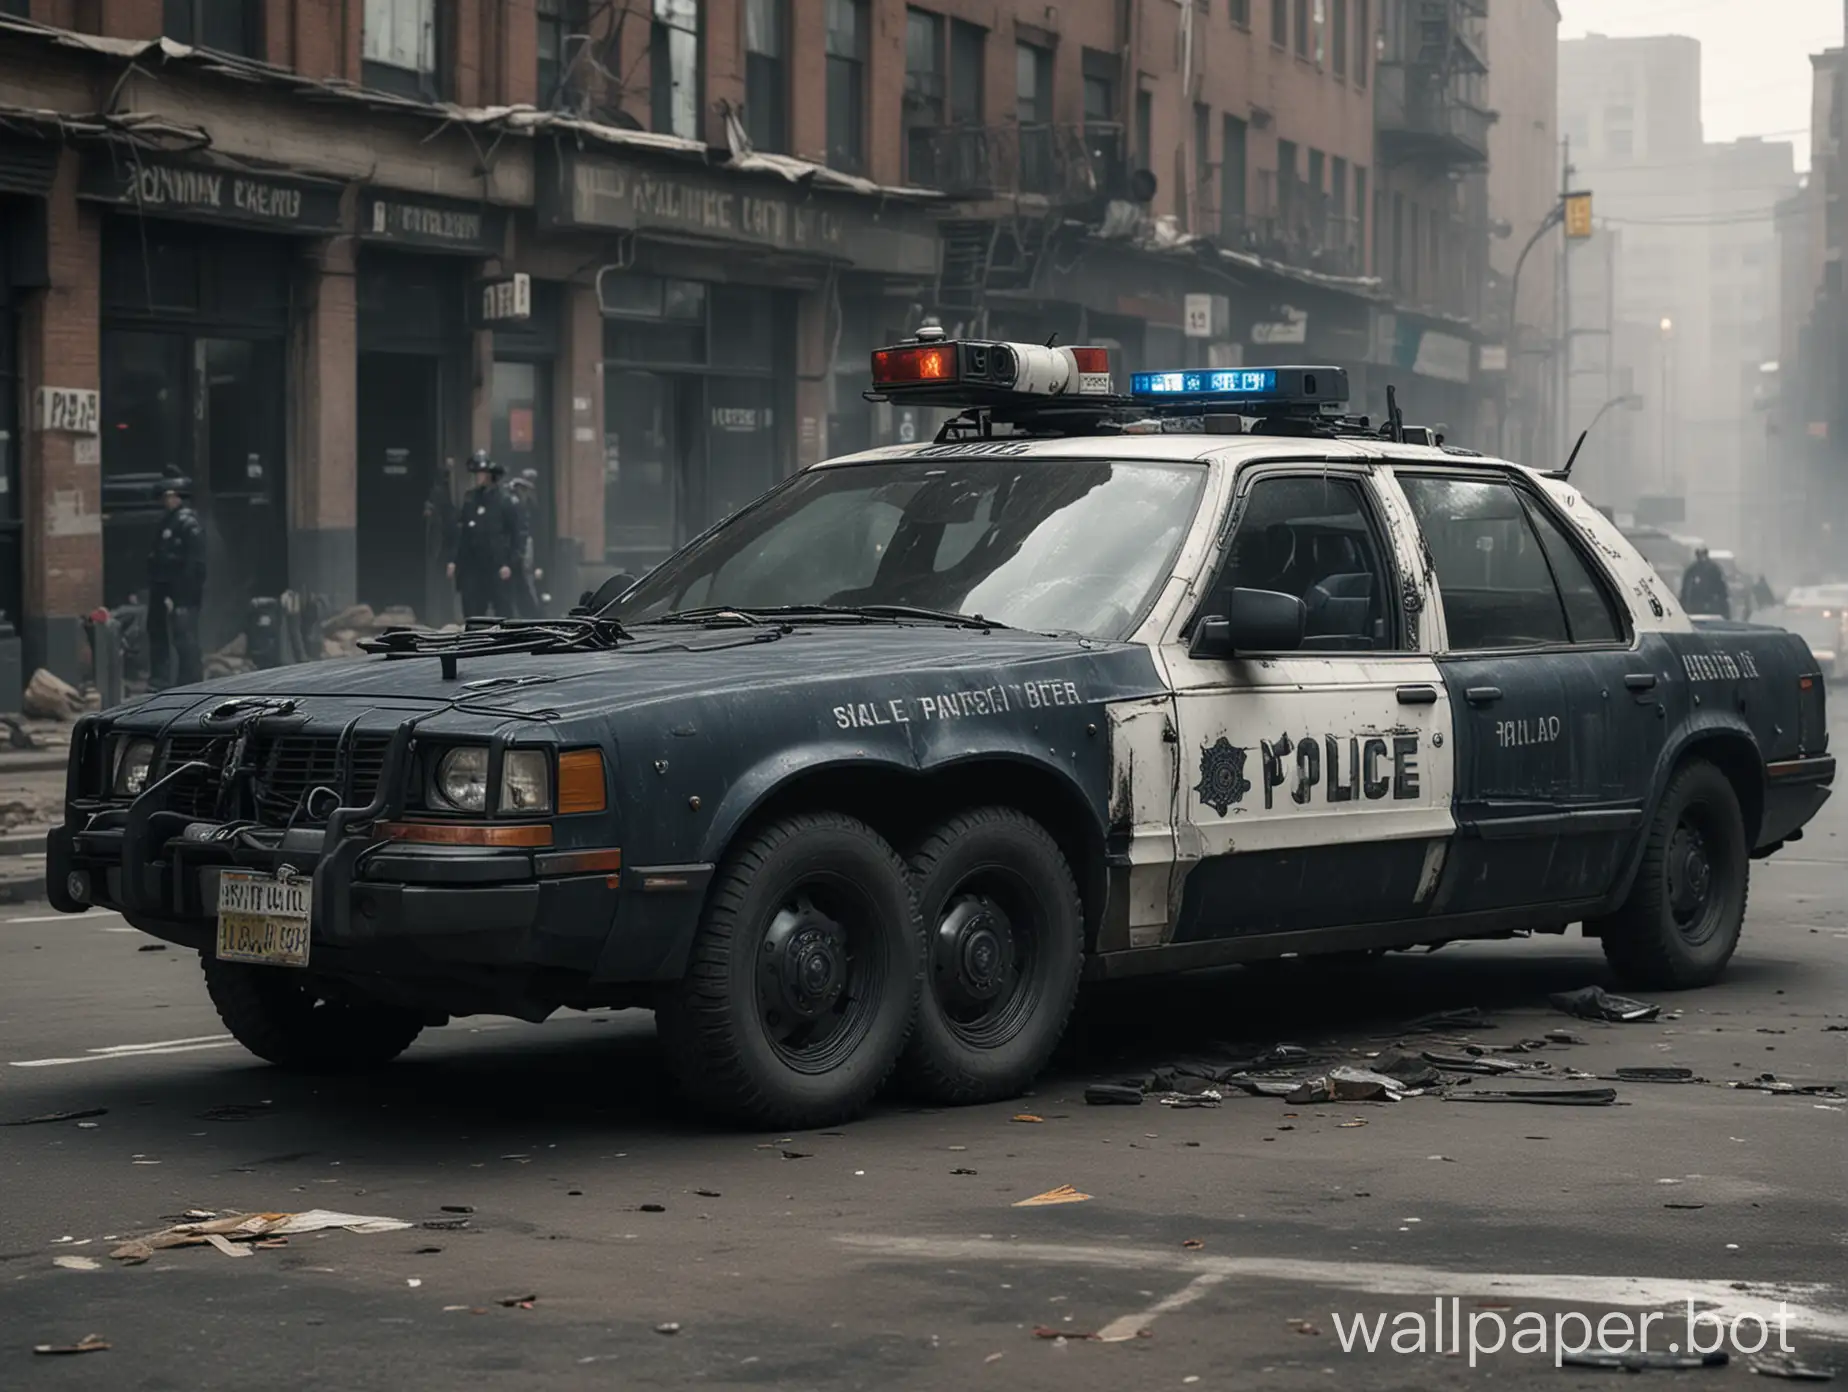 Dystopian world police car